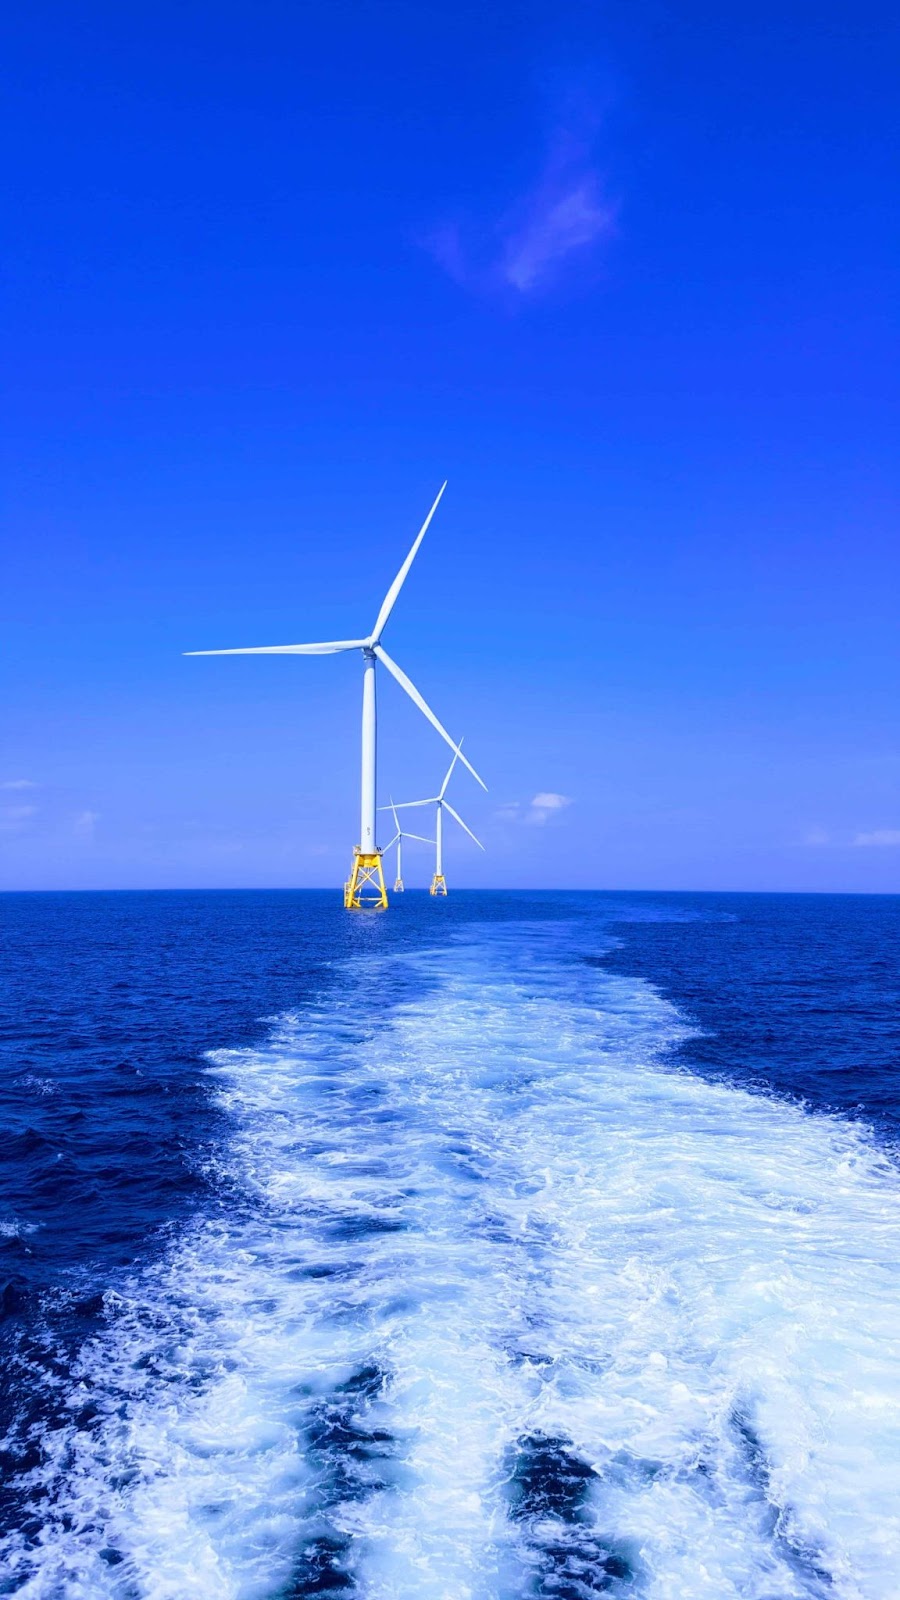 marine renewable energy - offshore wind power plants